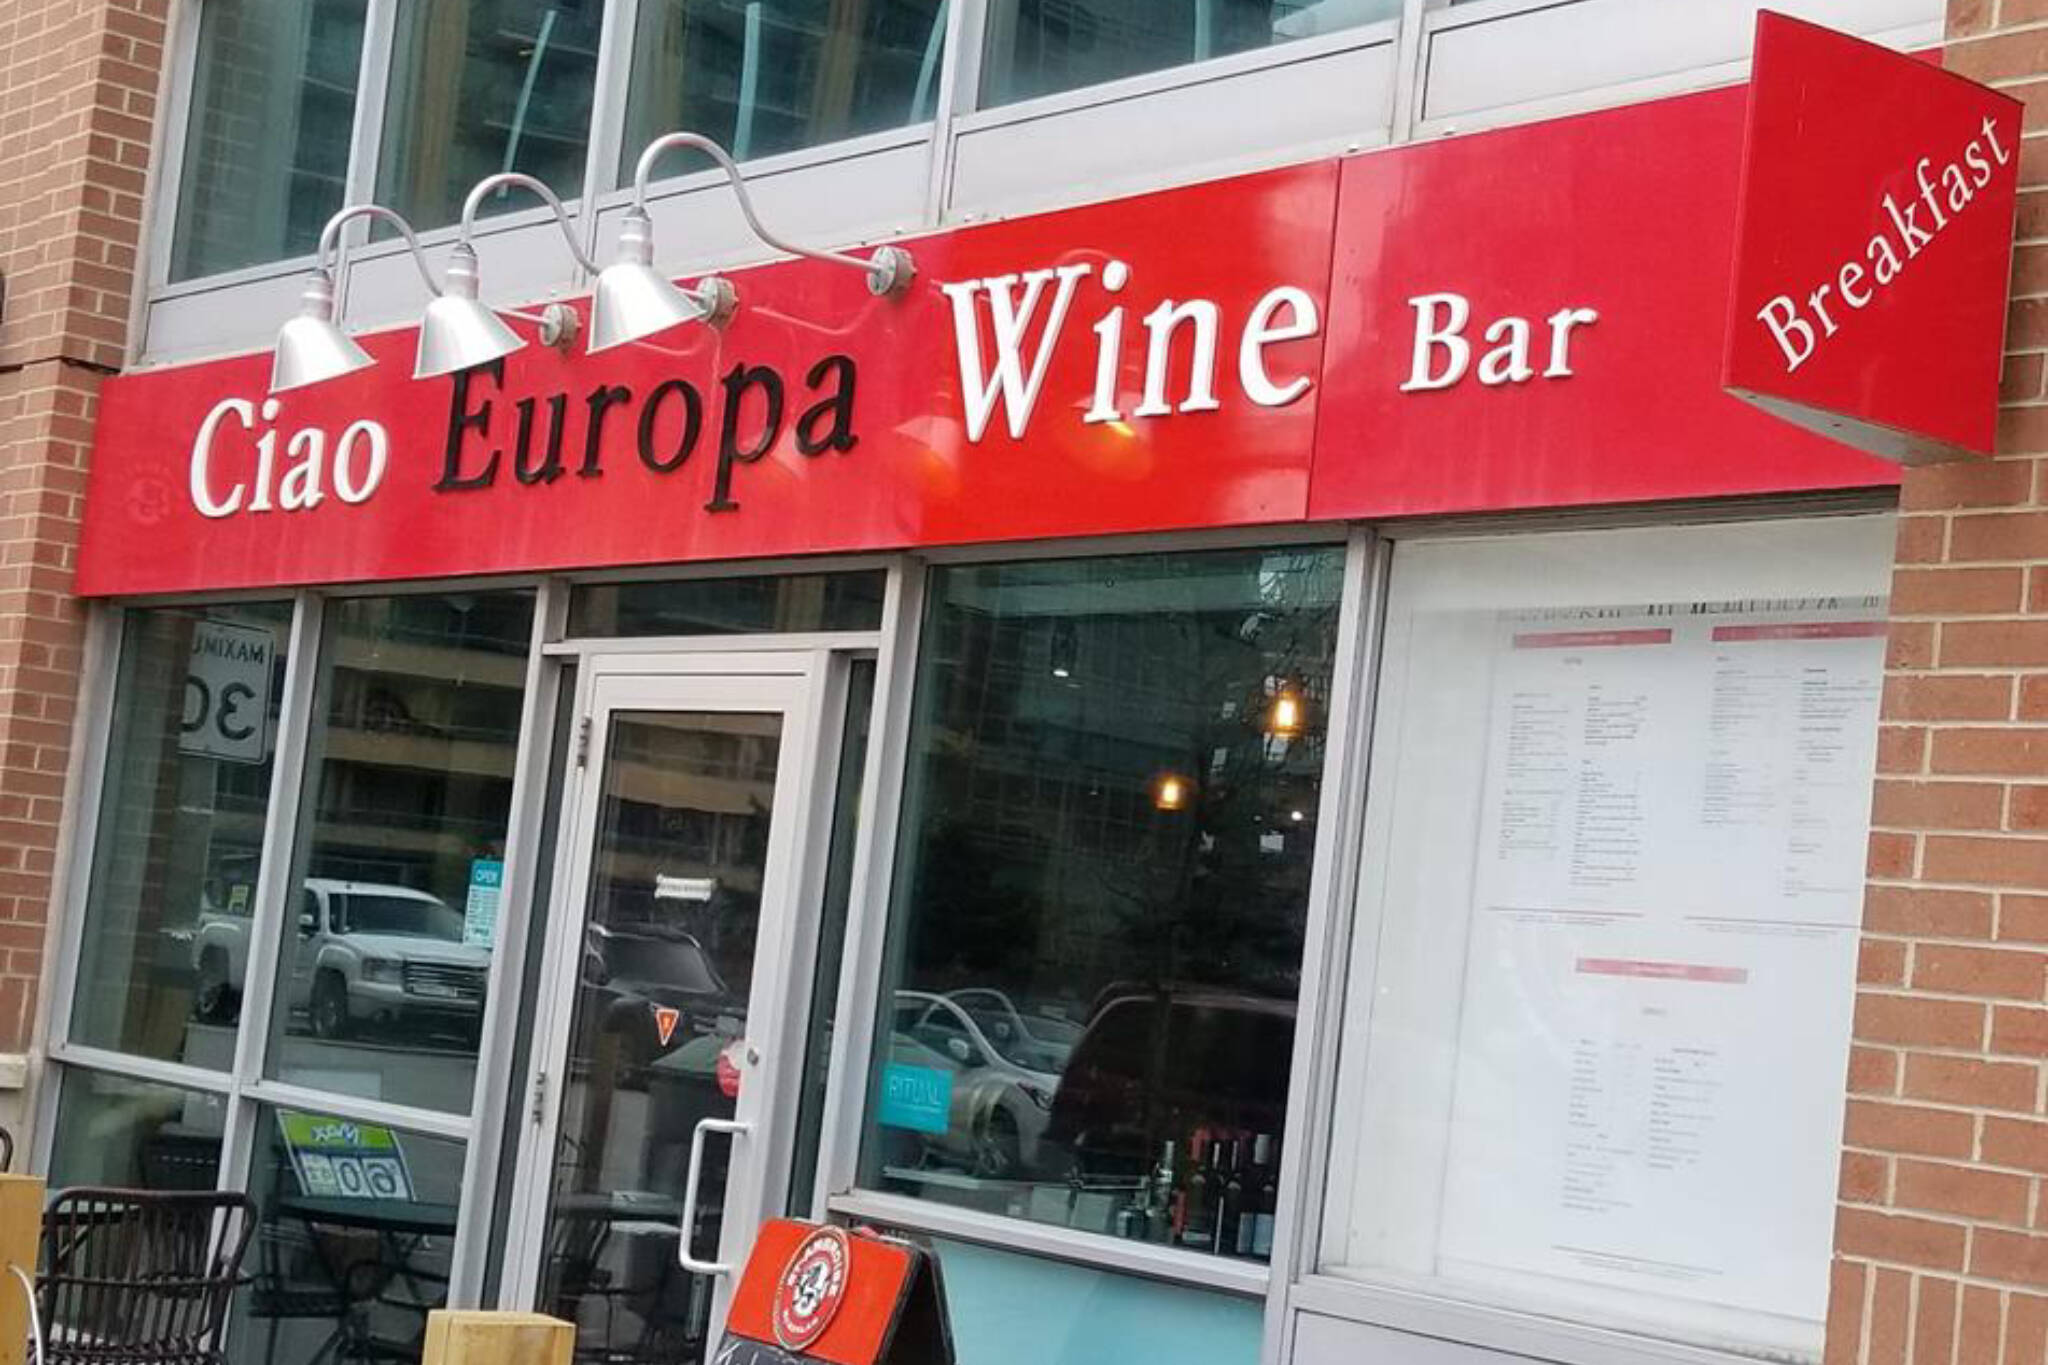 ciao europa wine bar toronto